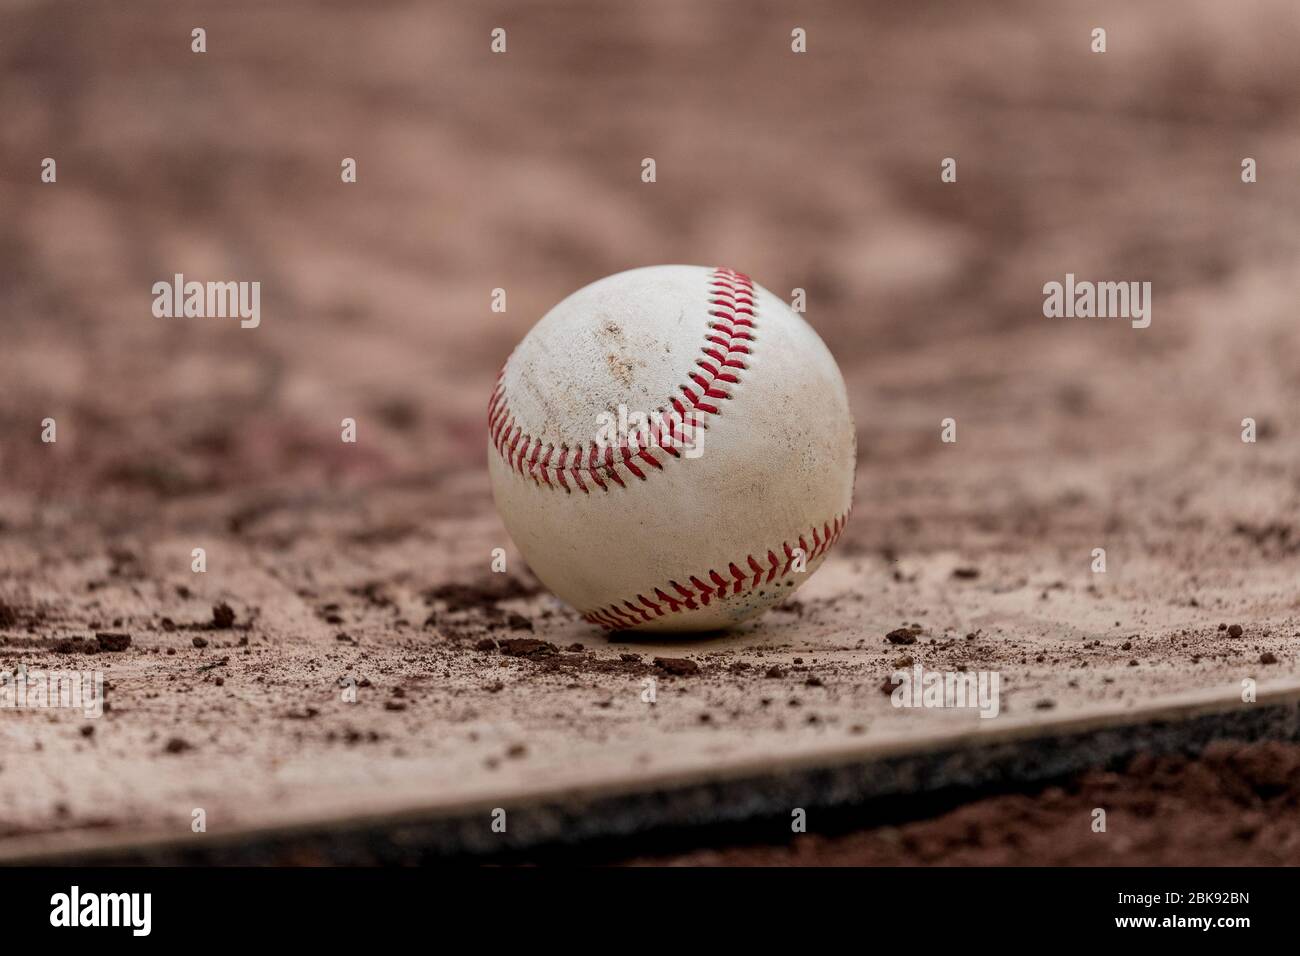 Baseball on a dirt baseball field Stock Photo